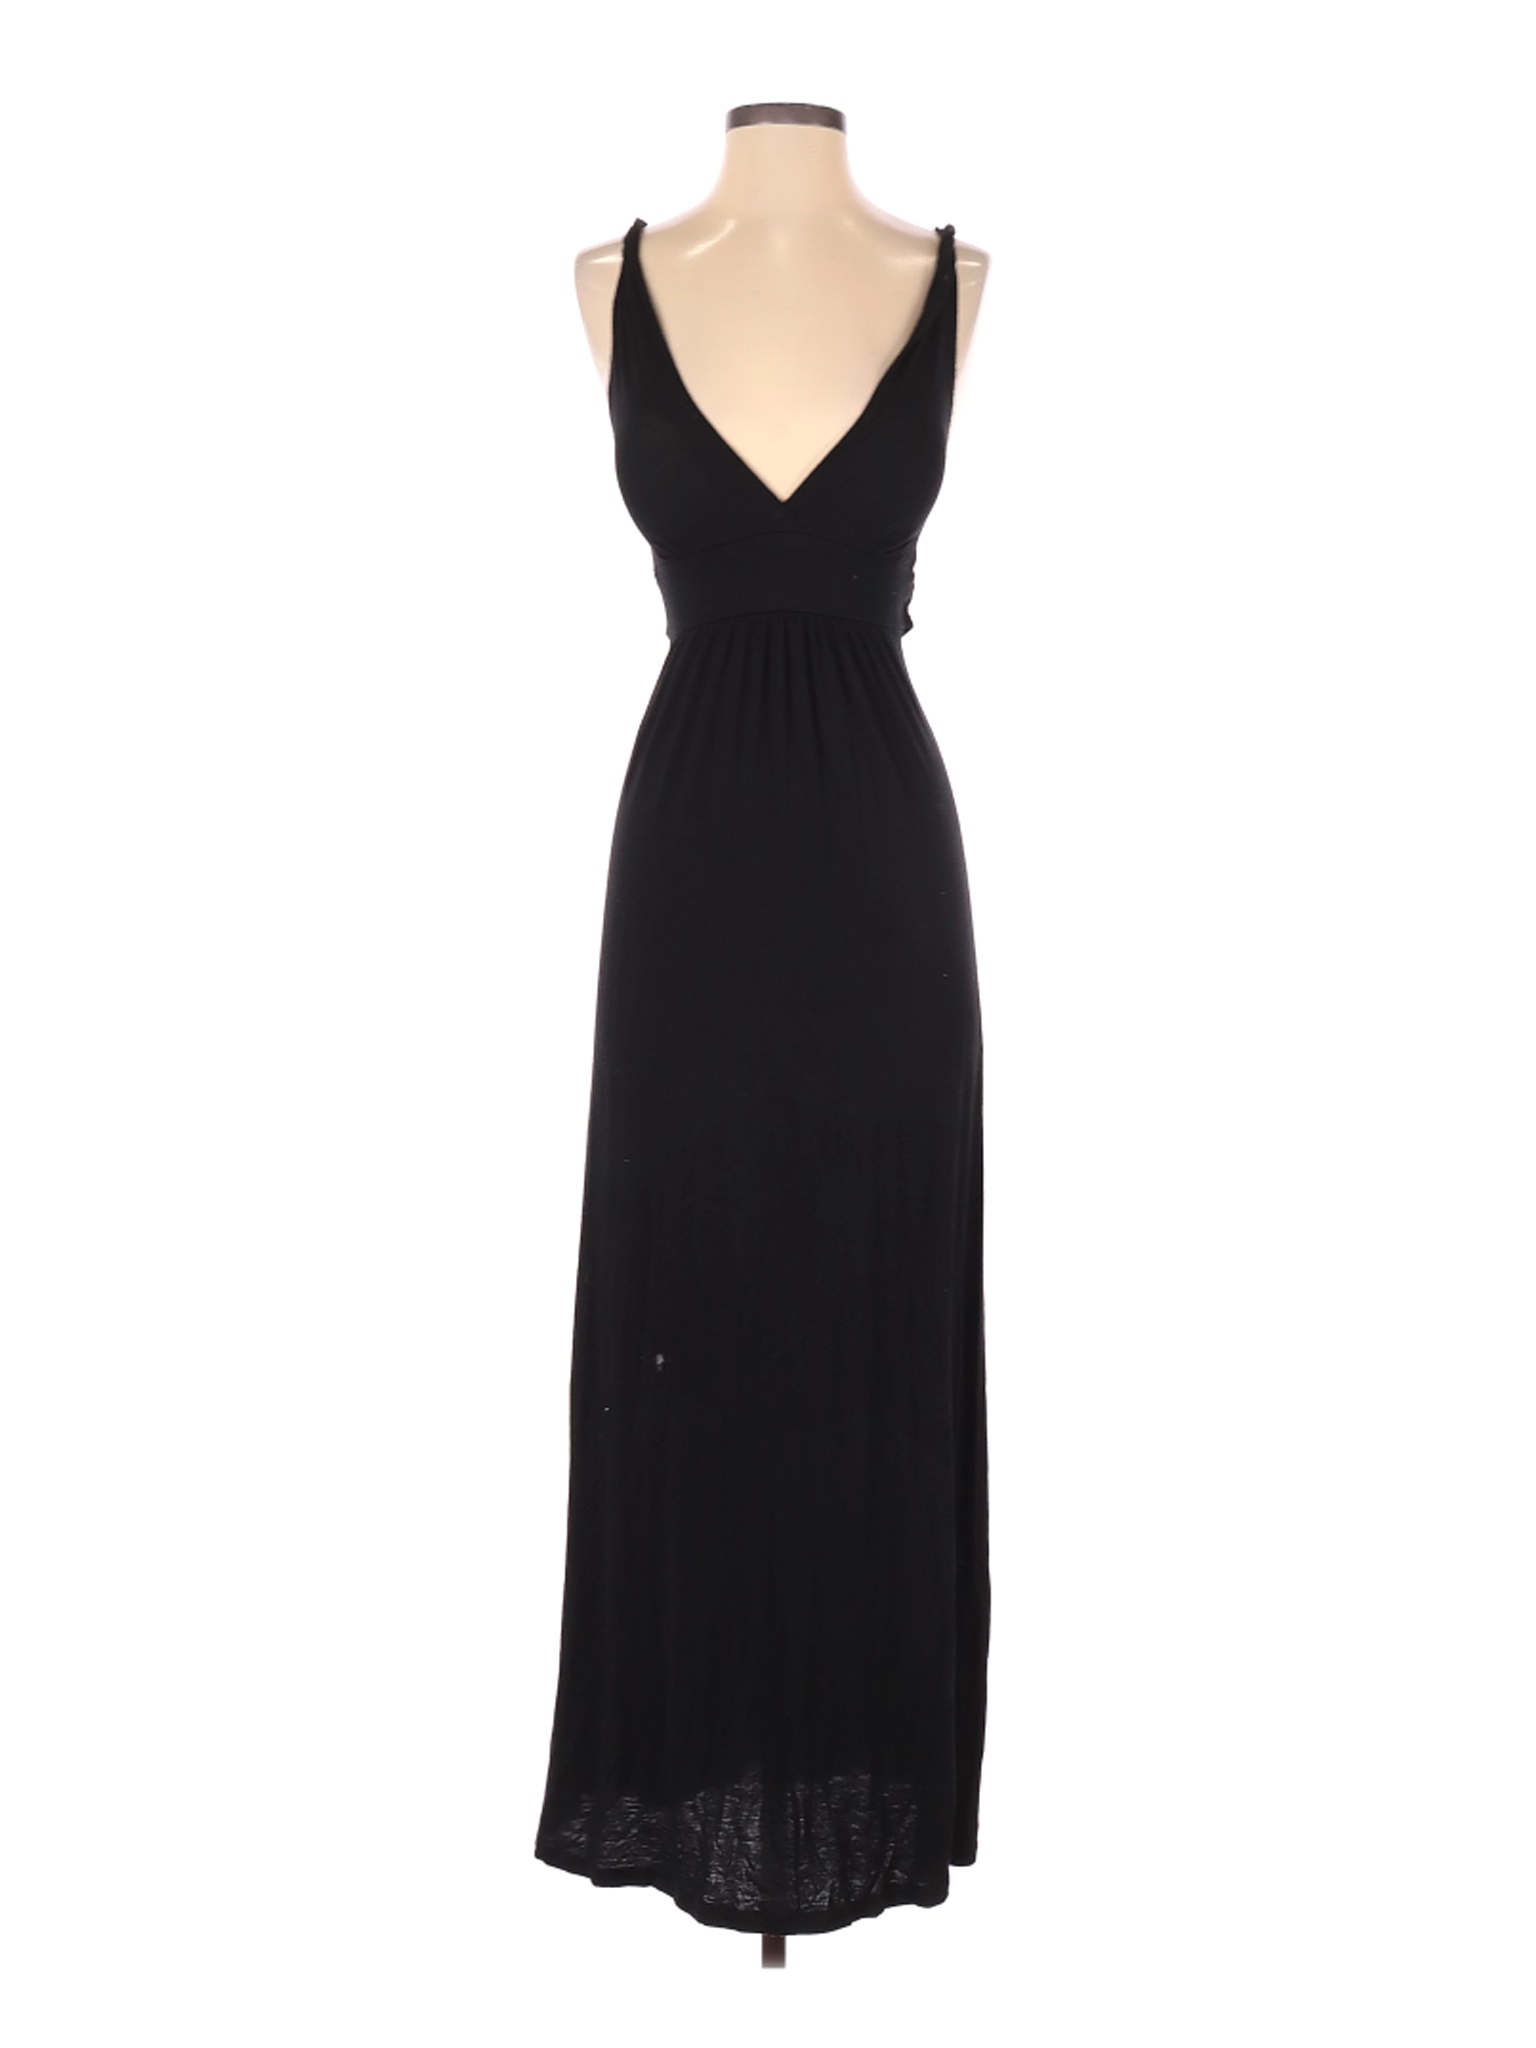 American Dream Women Black Casual Dress S | eBay